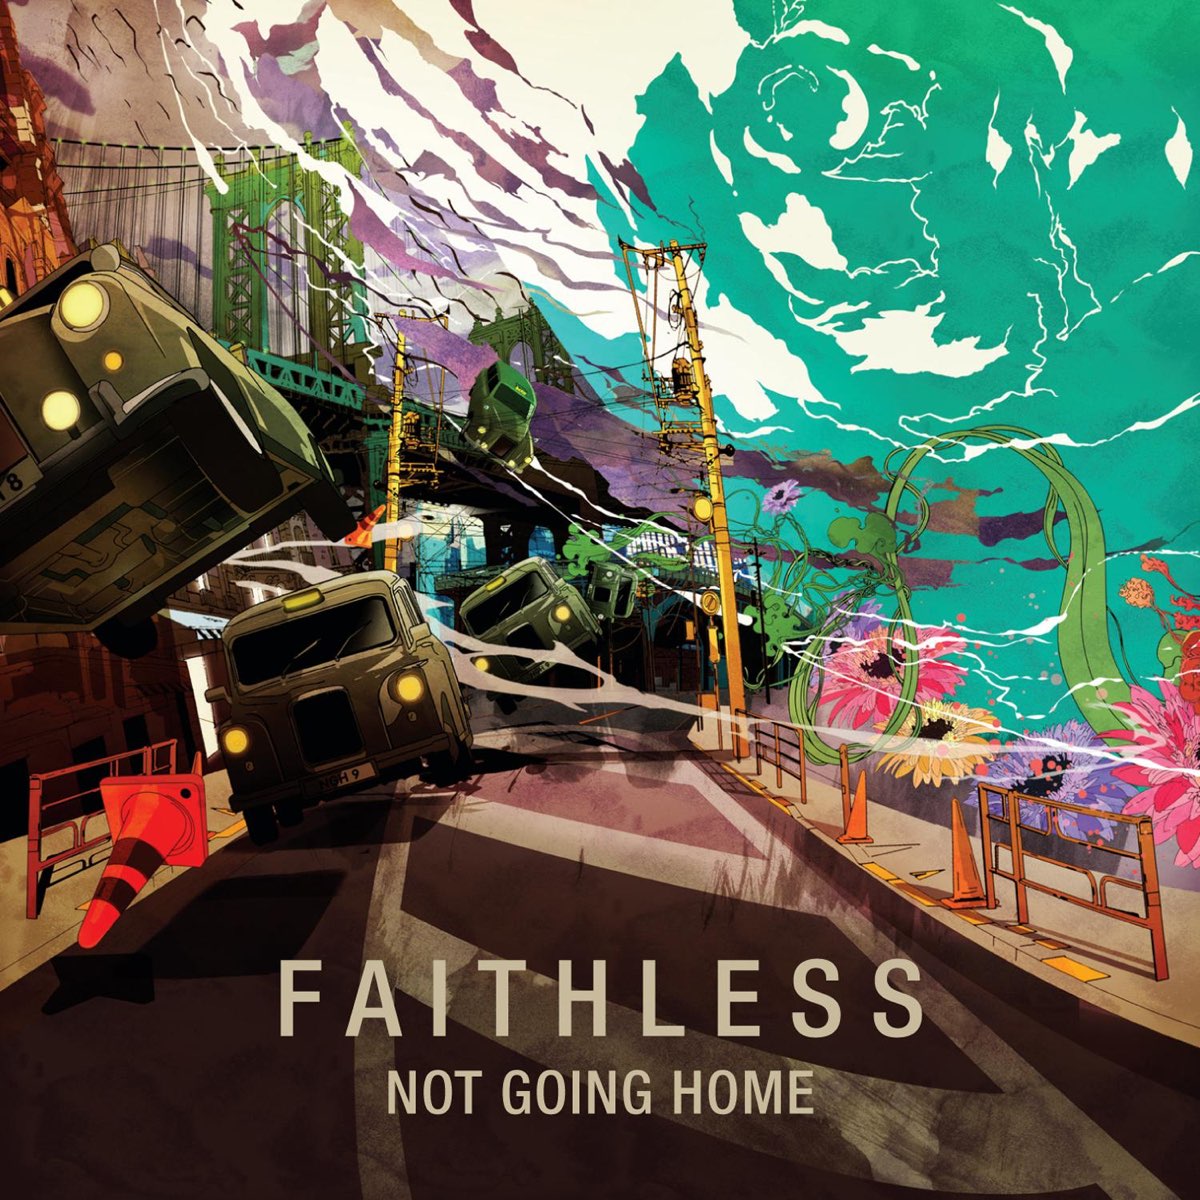 Нот гоу. Faithless not going Home. Going Home картины. Not going Home 2.0 Faithless Eric Prydz. Фотообои Faithless.